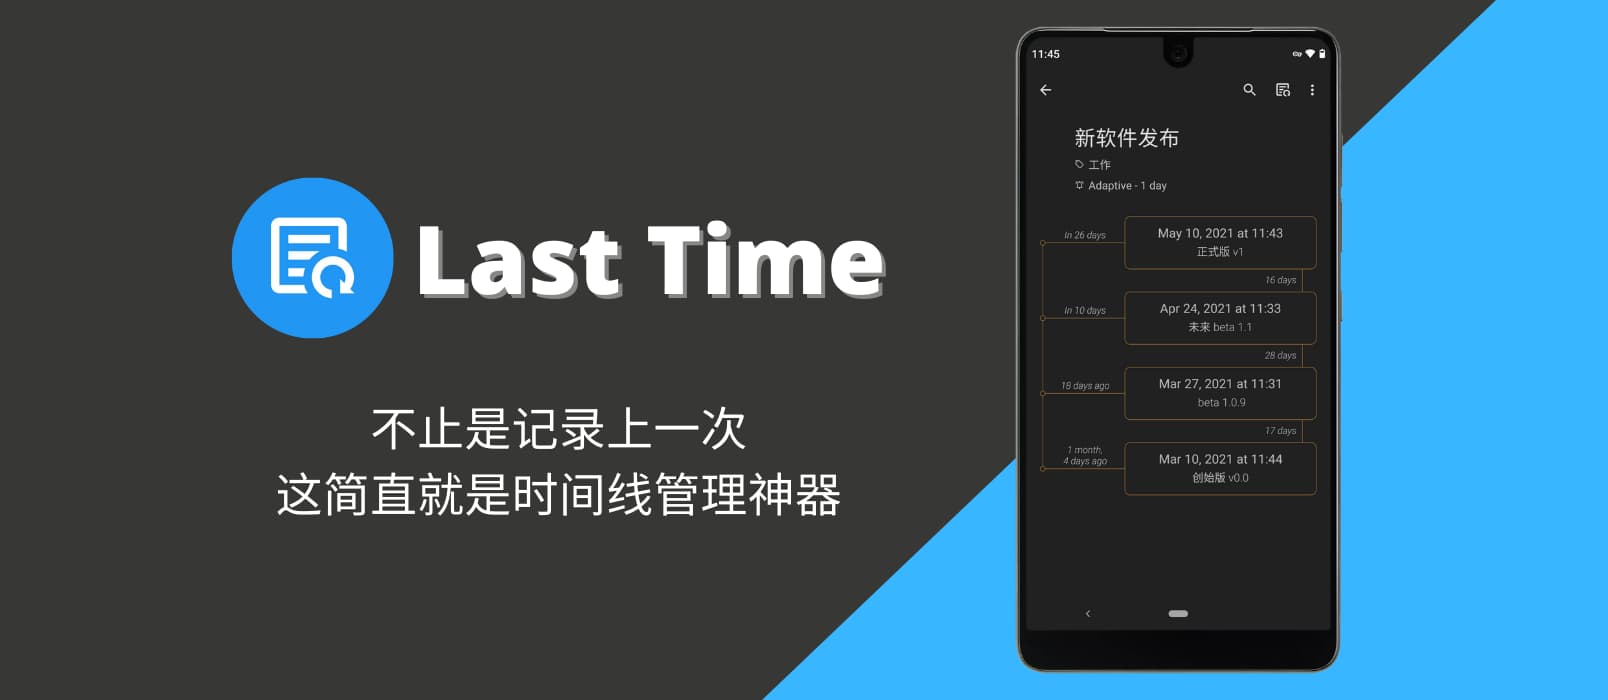 Last Time - 不止是记录上一次，这简直就是时间线管理神器[Android]